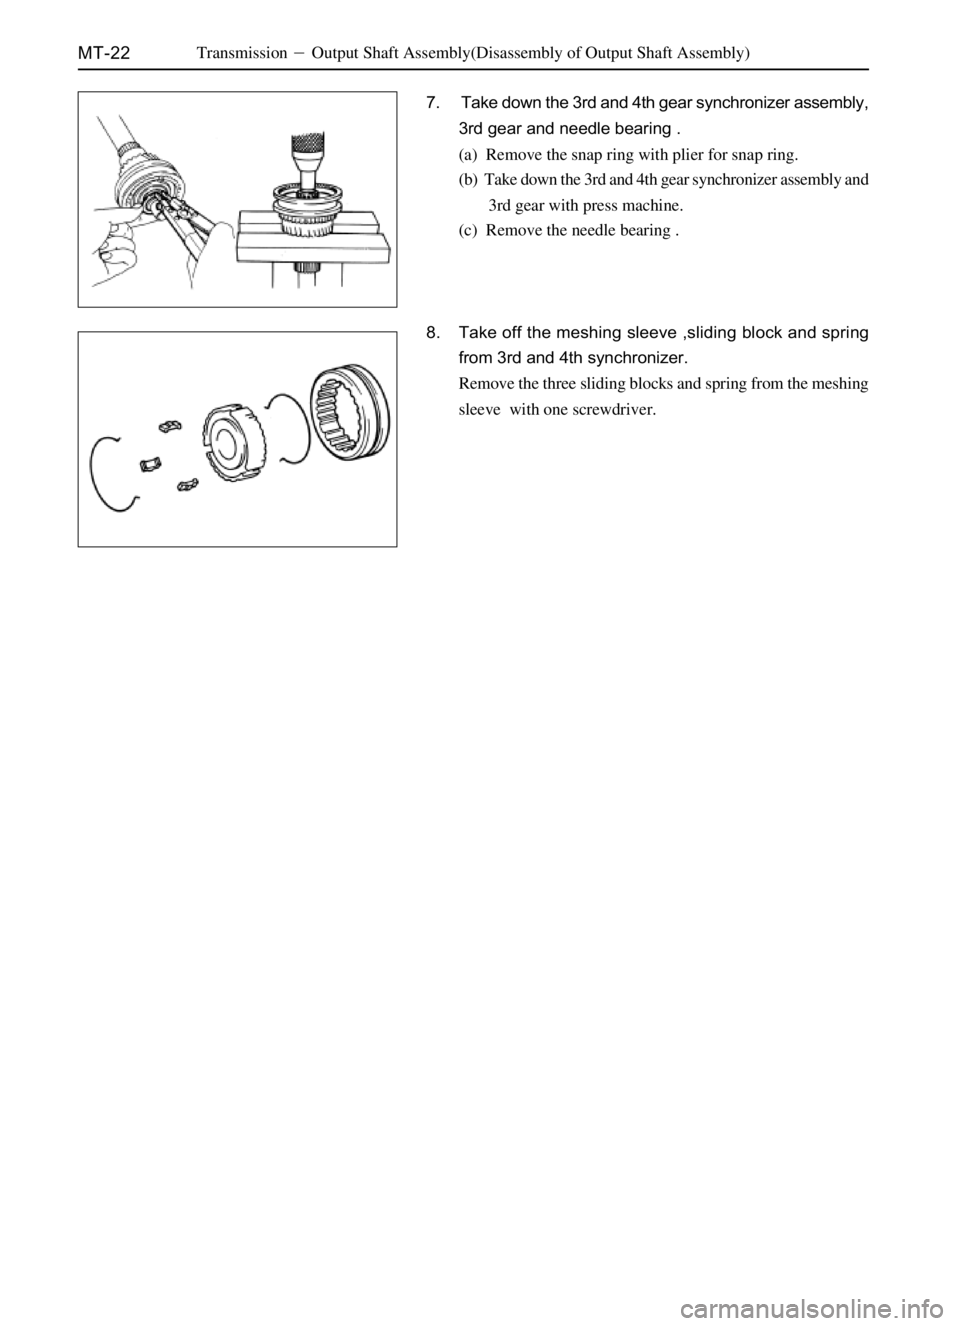 GREAT WALL DEER 2006  Service Manual MT-22TransmissionOutput Shaft Assembly(Disassembly of Output Shaft Assembly)
7.  Take down the 3rd and 4th gear synchronizer assembly,
3rd gear and needle bearing .
(a)  Remove the snap ring with pli